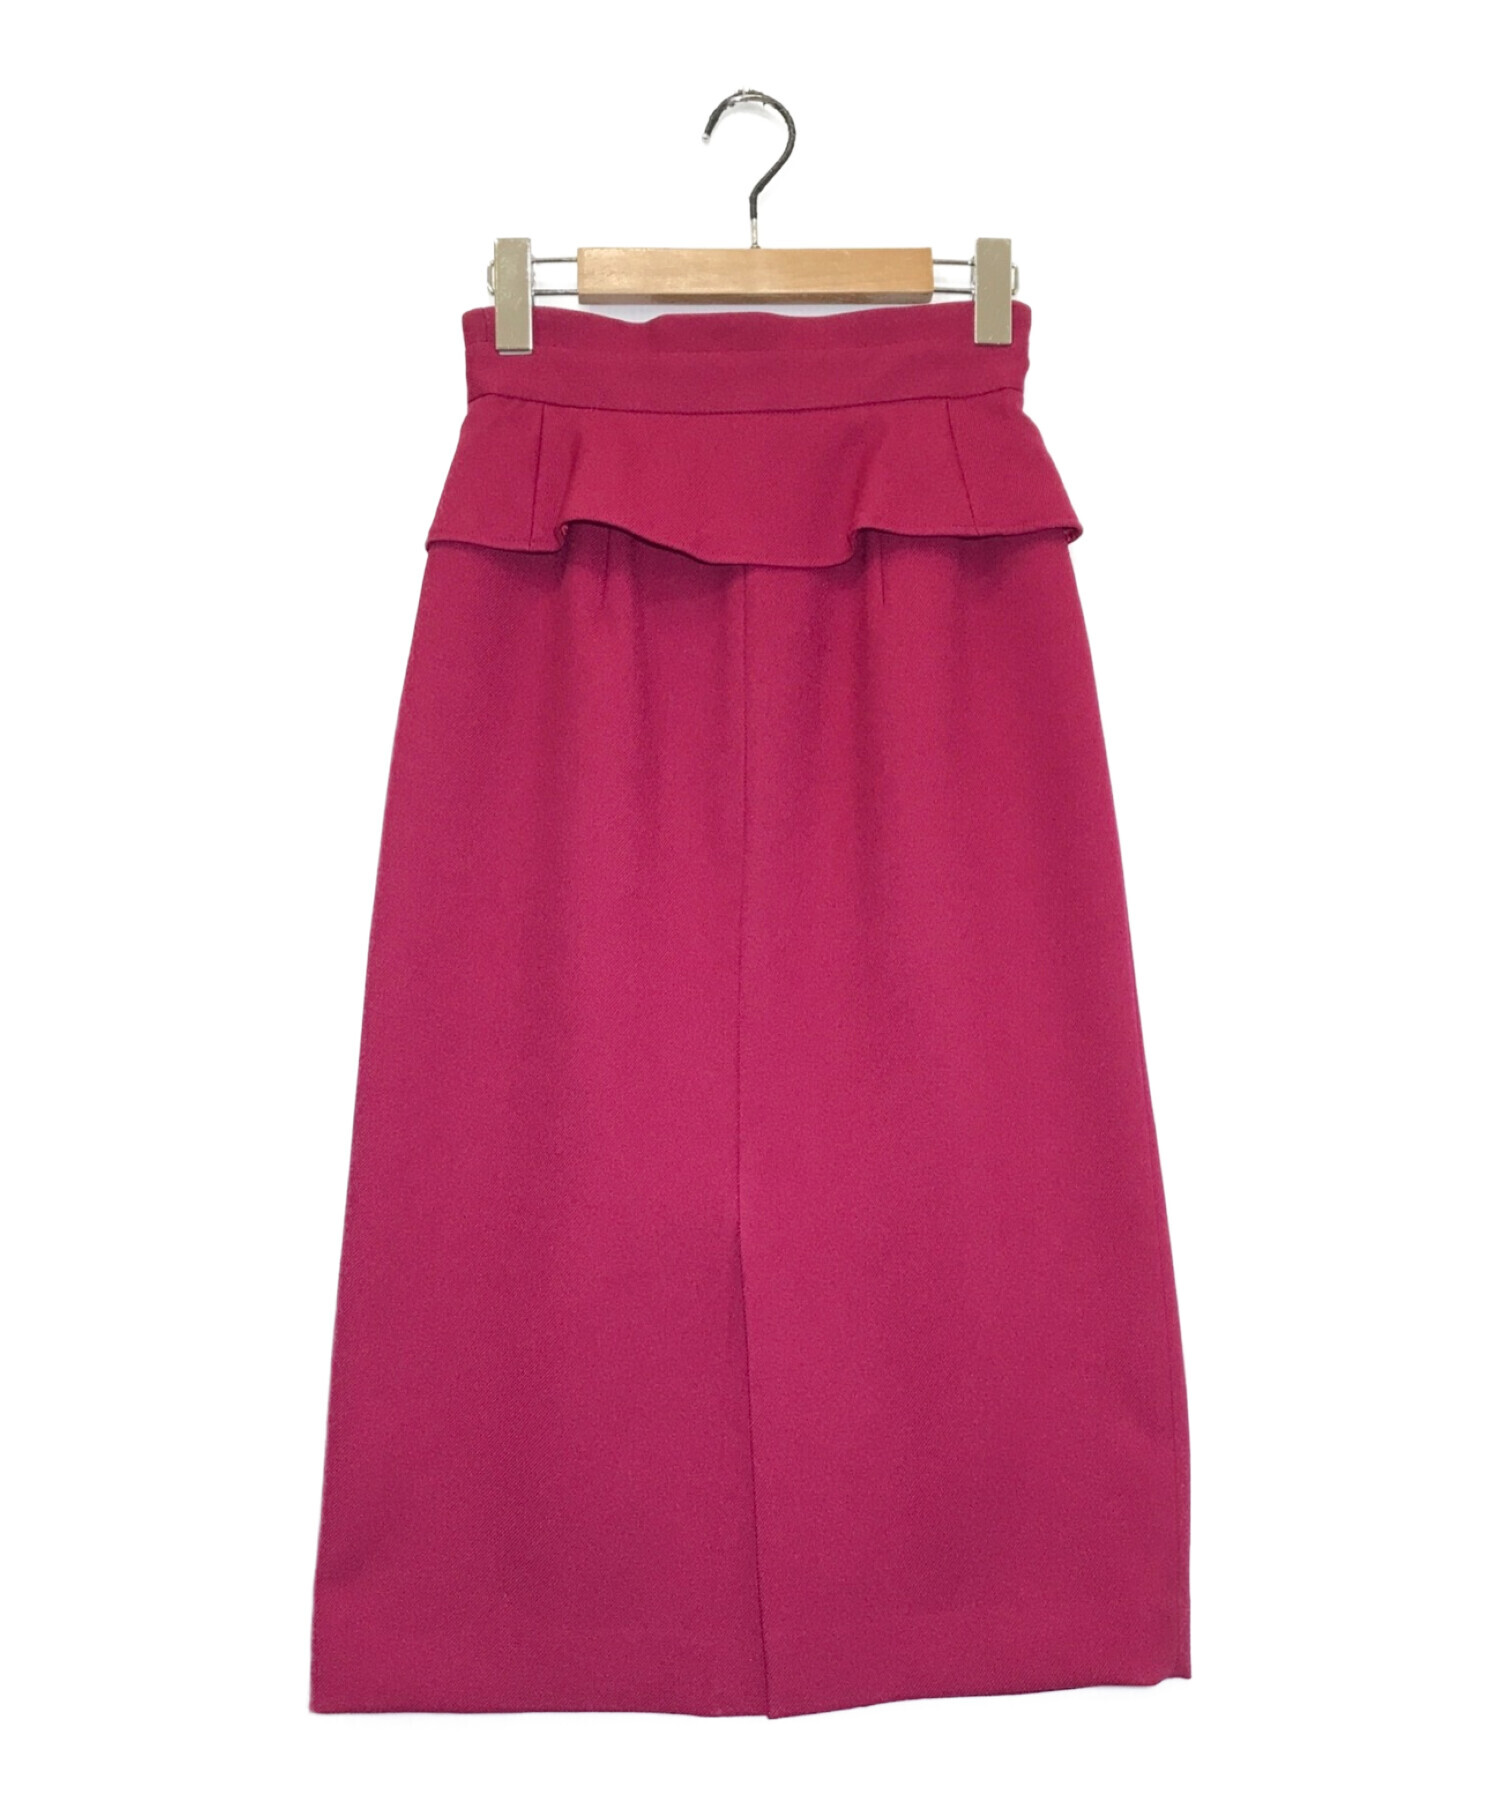 ANAYI (アナイ) ウール調合繊ペプラム スカート ピンク サイズ:34